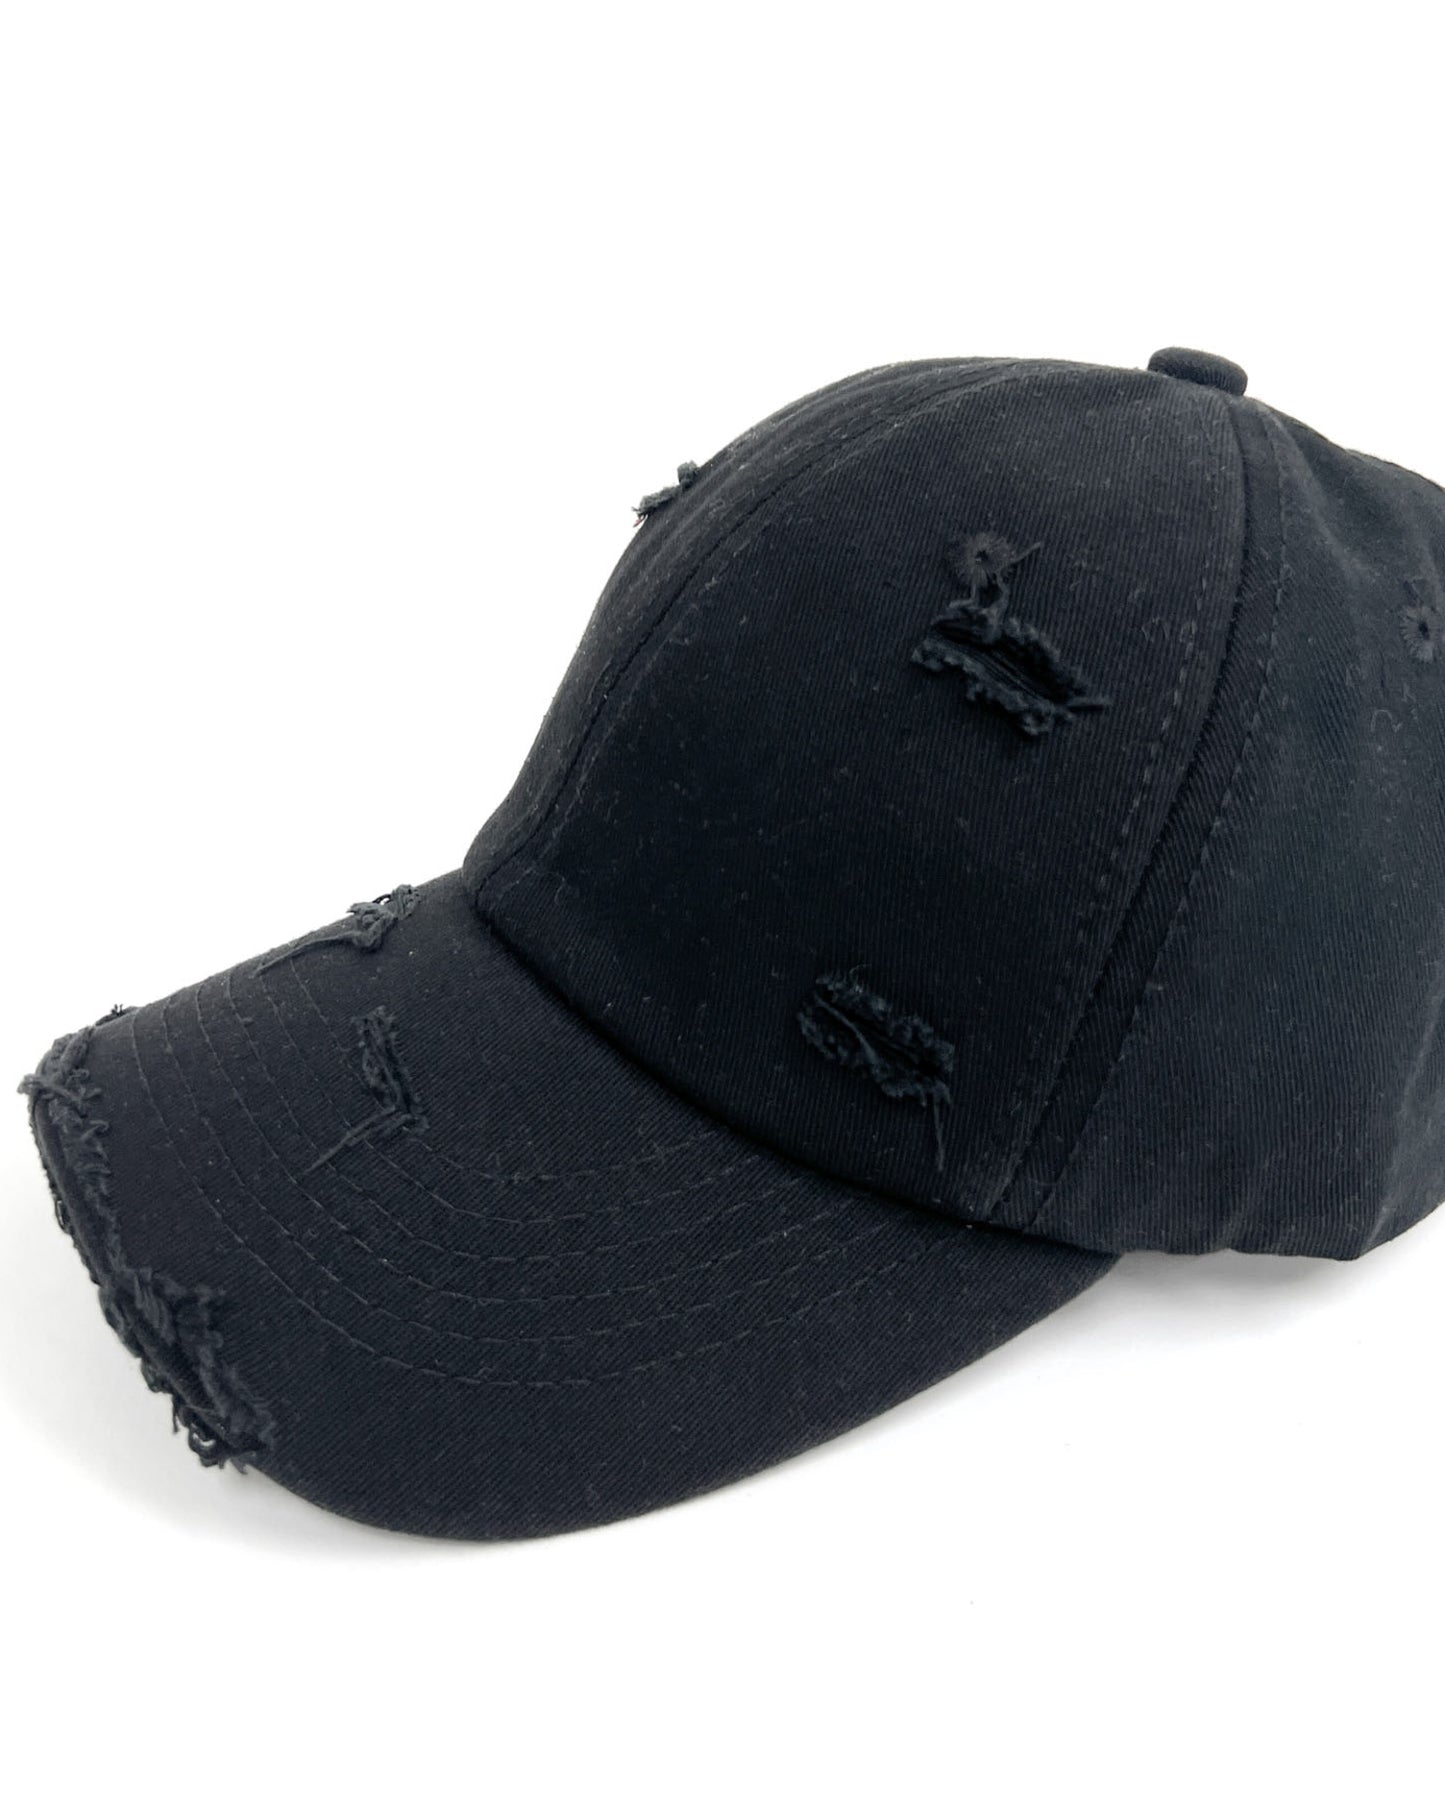 black ripped cap *pre-order*